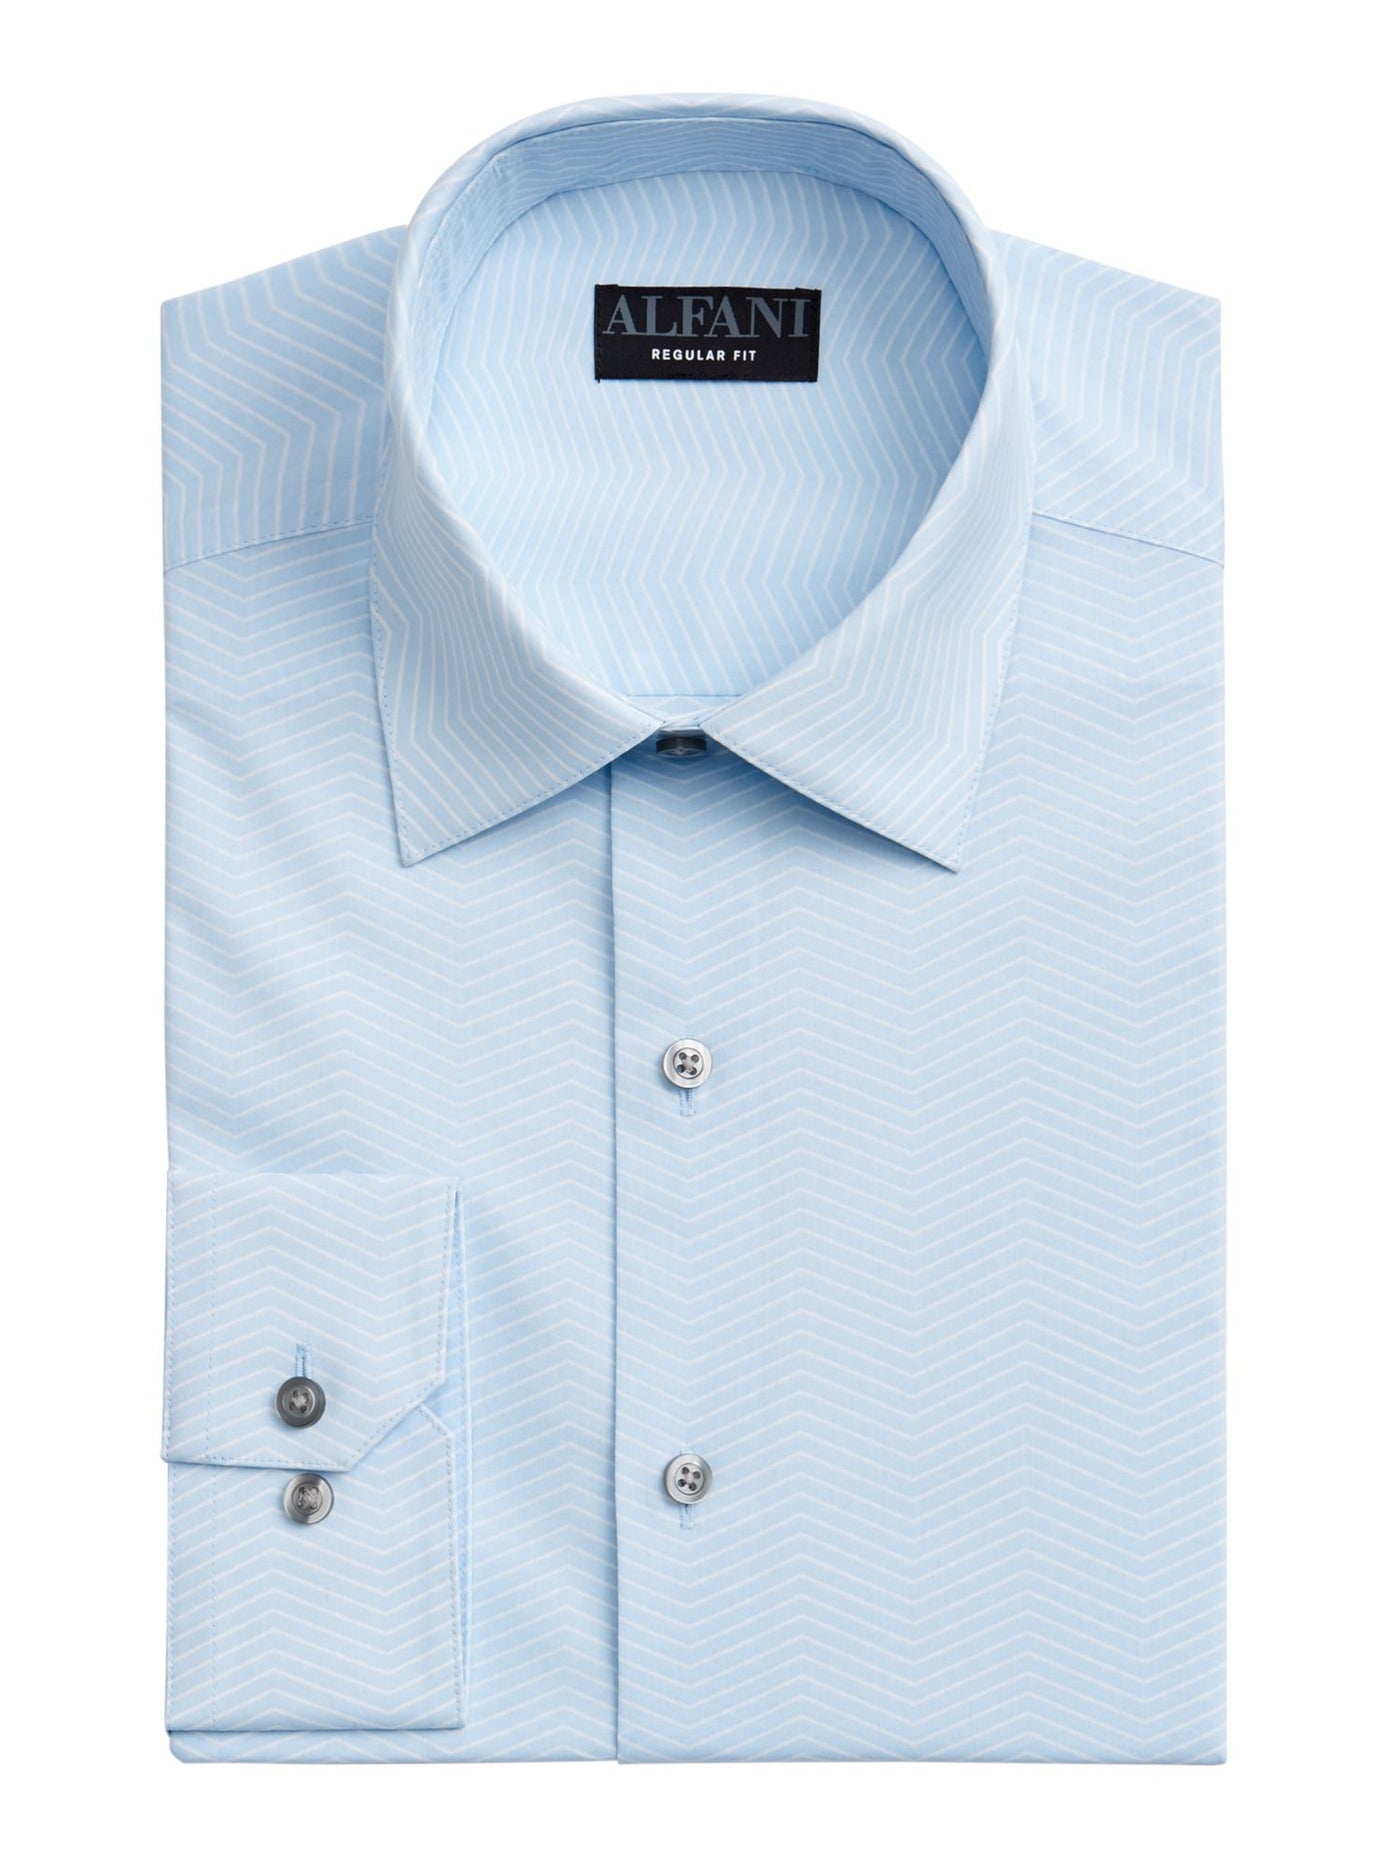 ALFANI Mens Light Blue Chevron Spread Collar Performance Stretch Dress Shirt M 15/15.5- 34/35